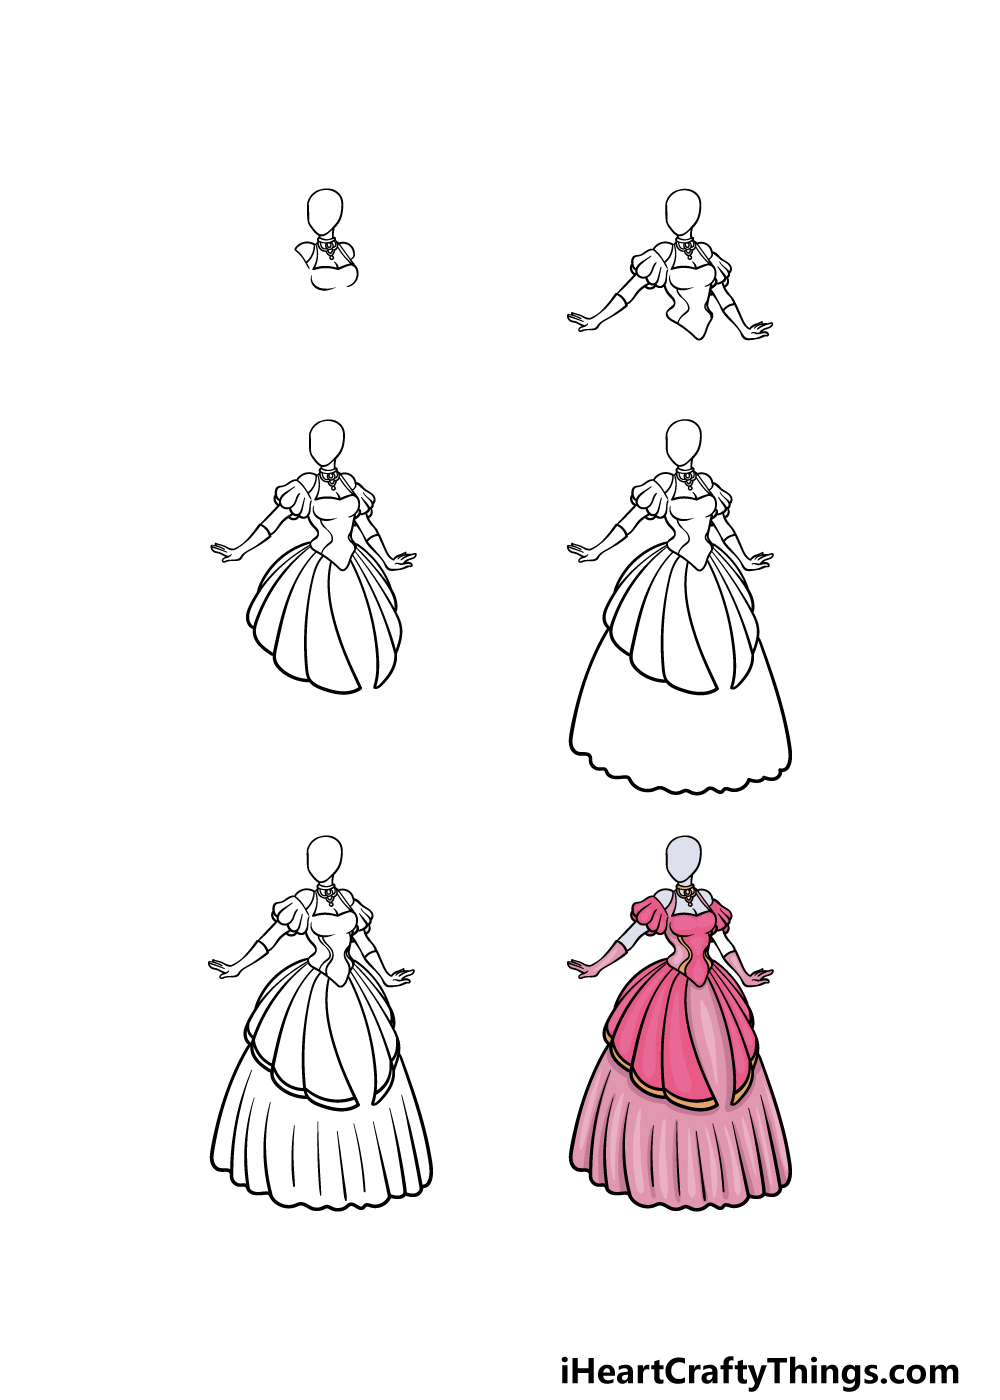 2D image of the drawing of dress designer | Download Scientific Diagram-saigonsouth.com.vn